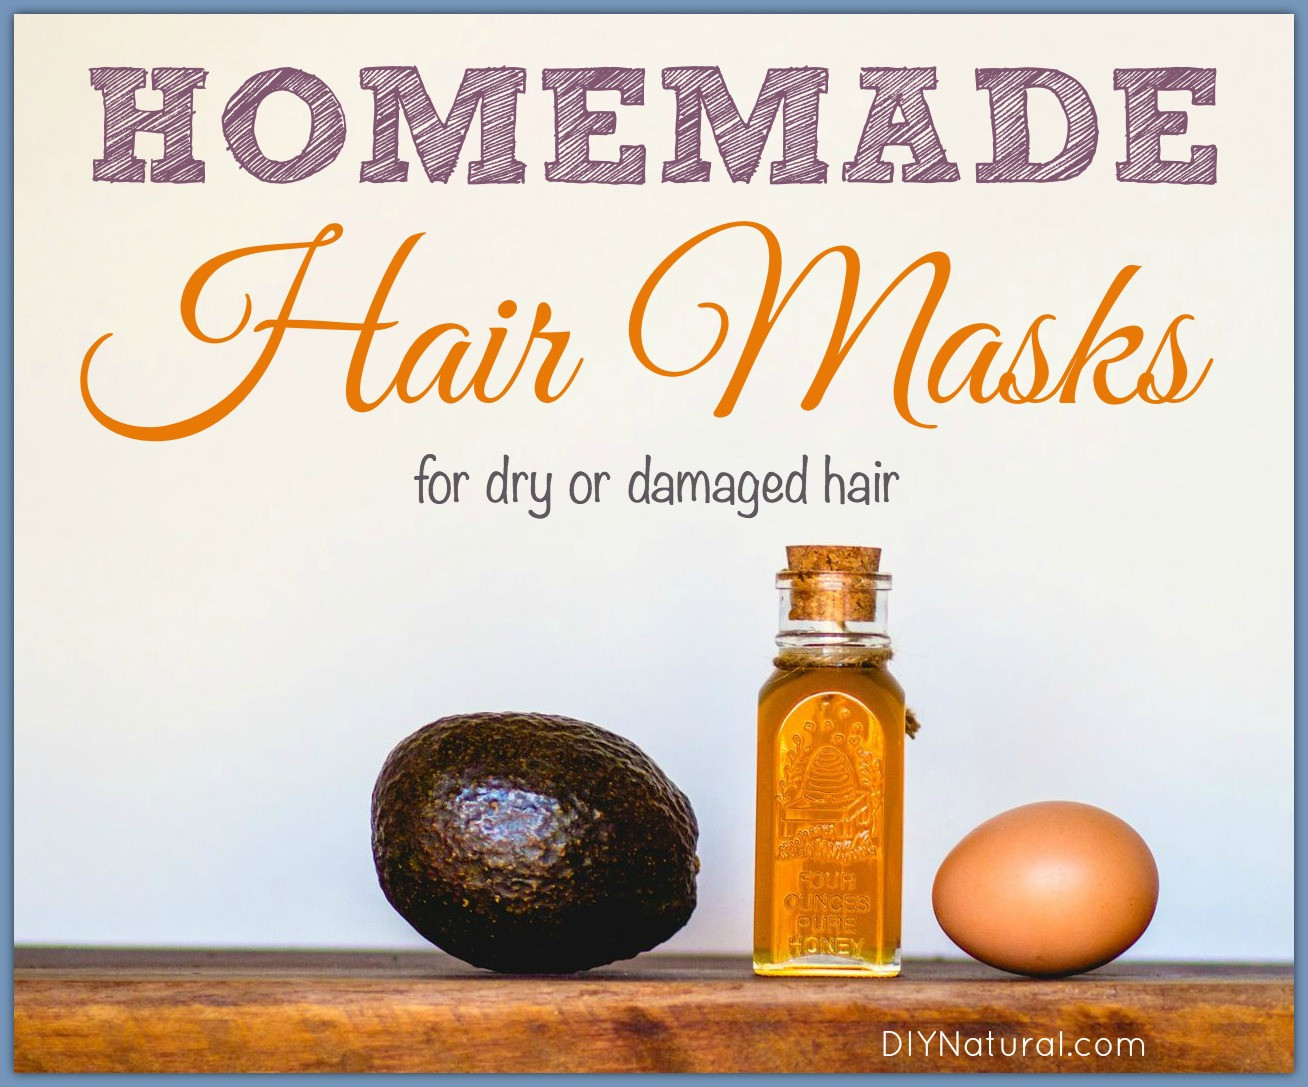 DIY Hair Masks For Dry Hair
 Homemade Hair Masks for Dry or Damaged Hair